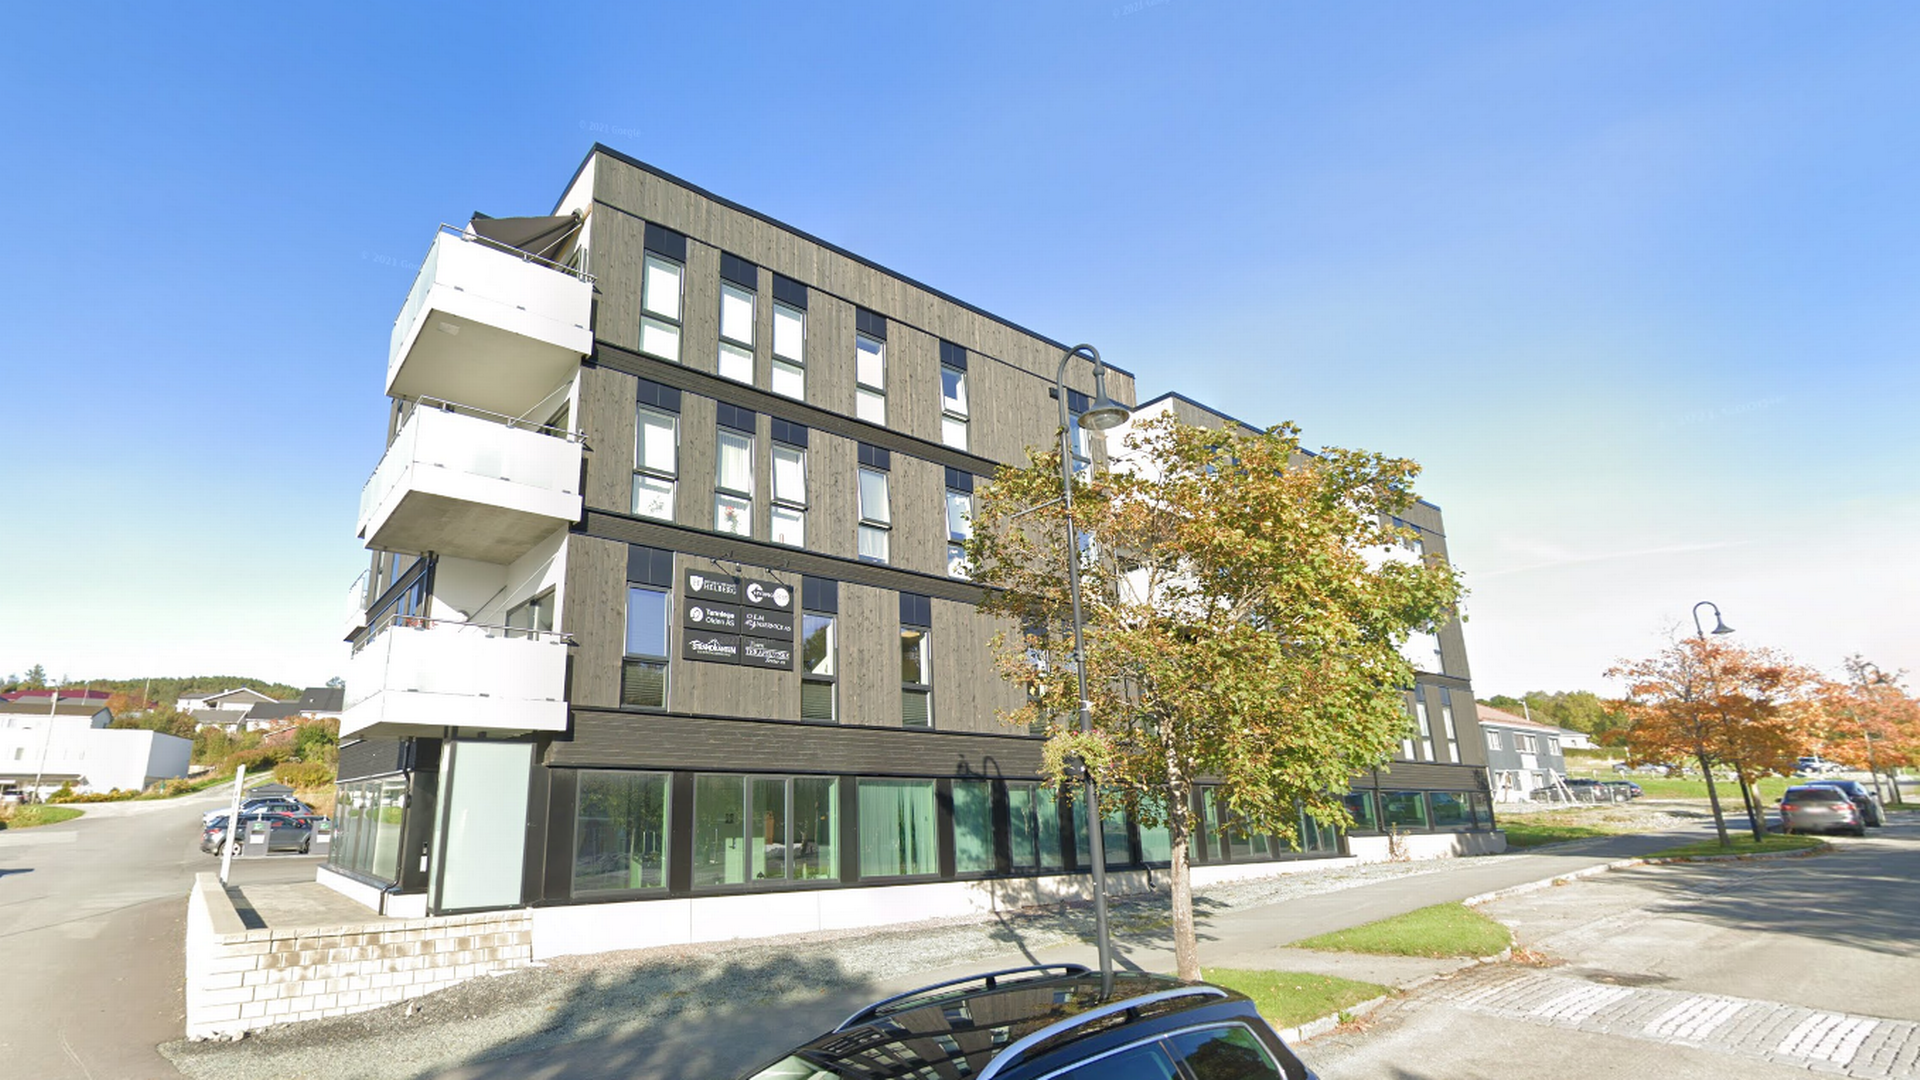 Spektor Advokat har sitt hovedkontor i dette bygget i Ørland kommune. | Foto: Google Street View